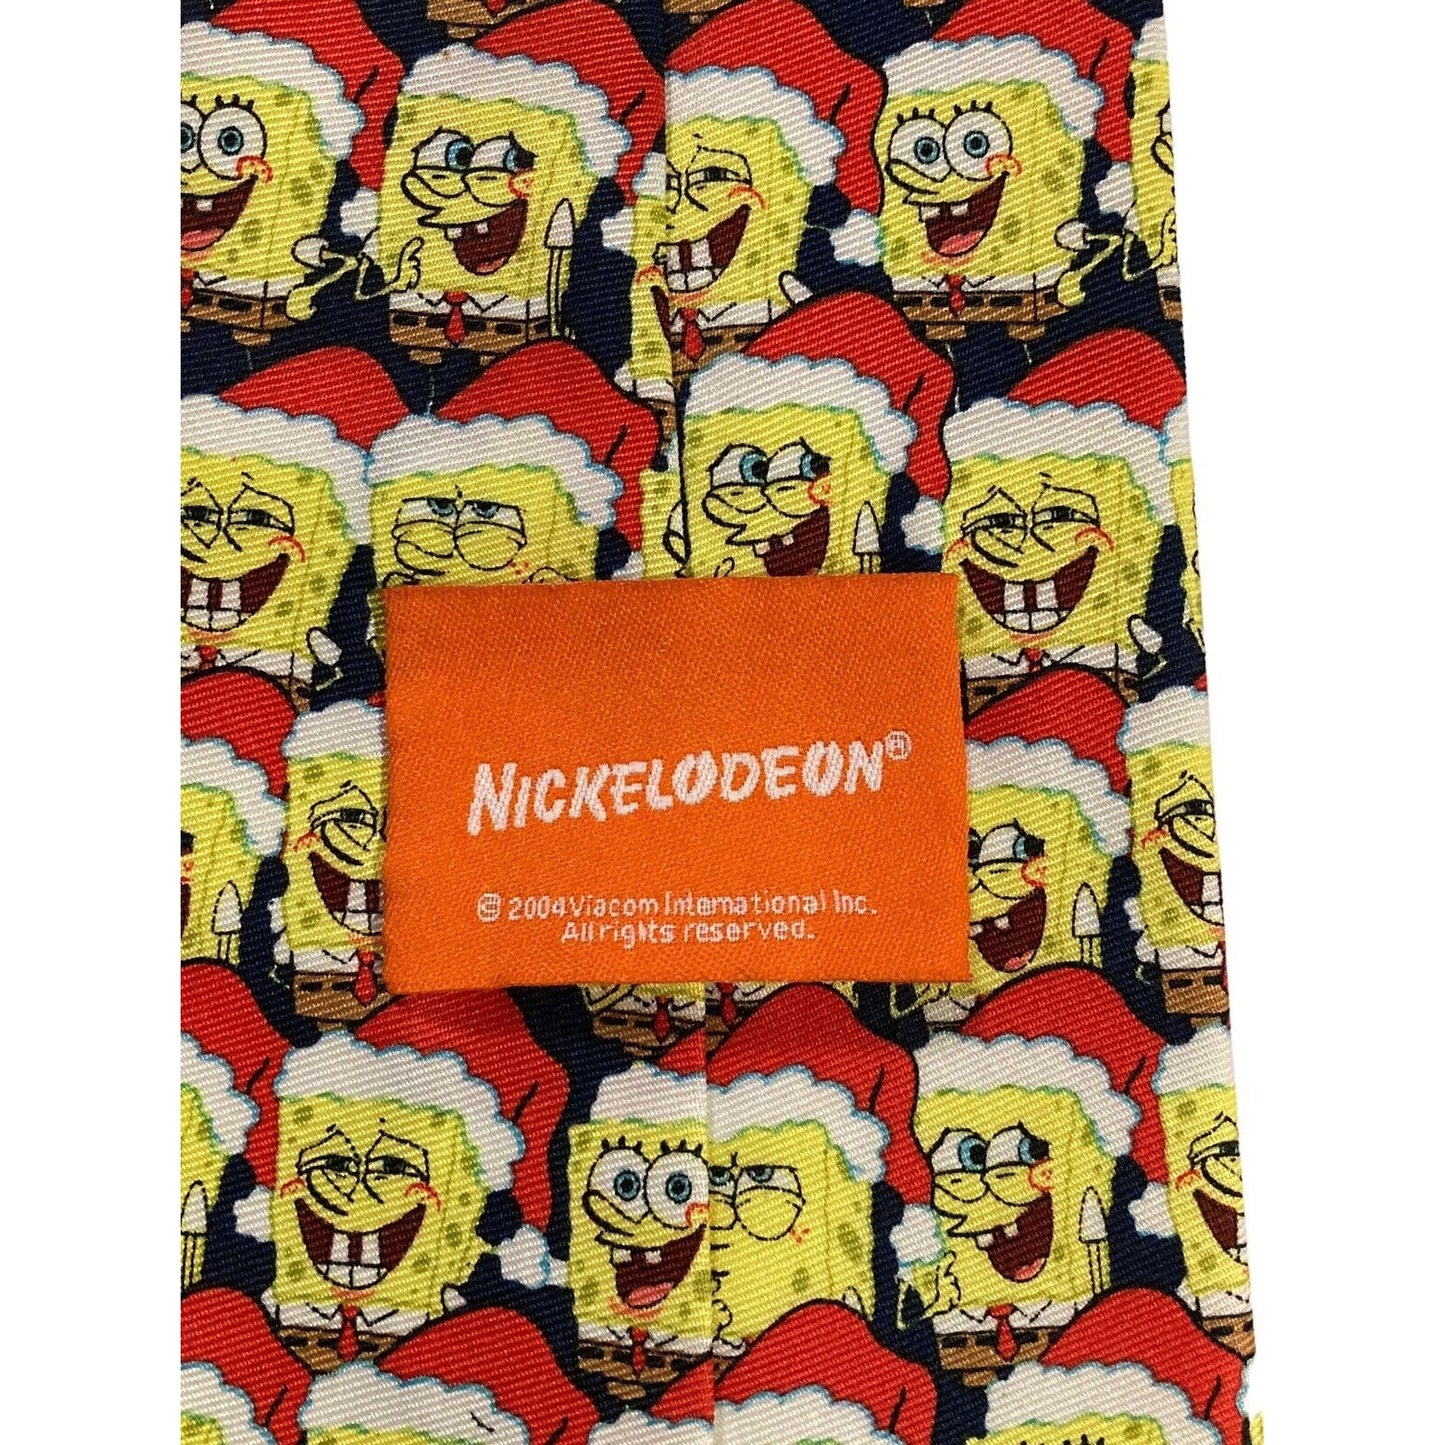 Nickelodeon SpongeBob SquarePants Christmas 2004 Novelty Necktie Cartoon